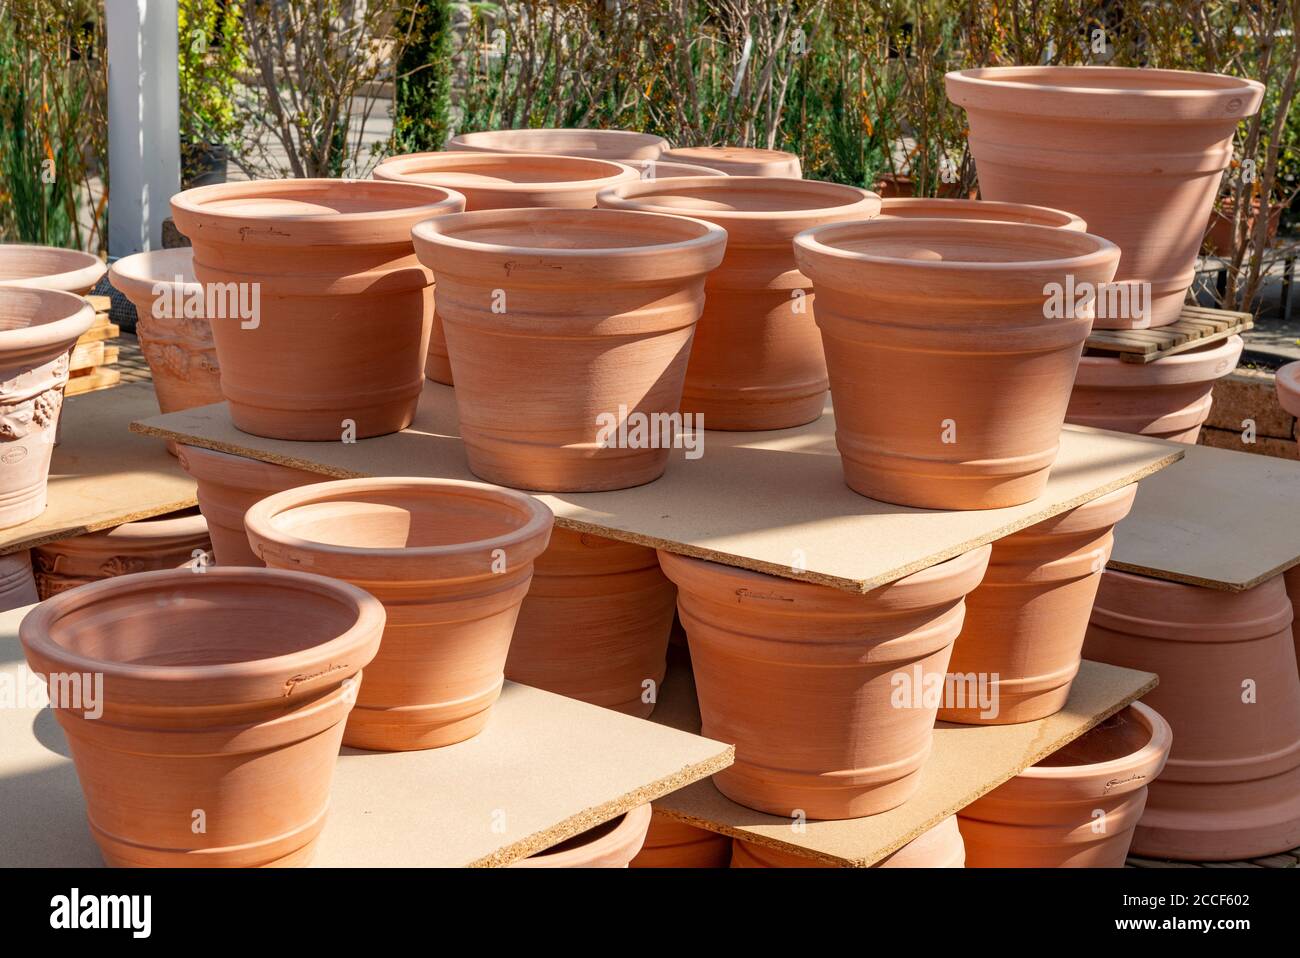 Clay pots, garden pot, stacked Stock Photo